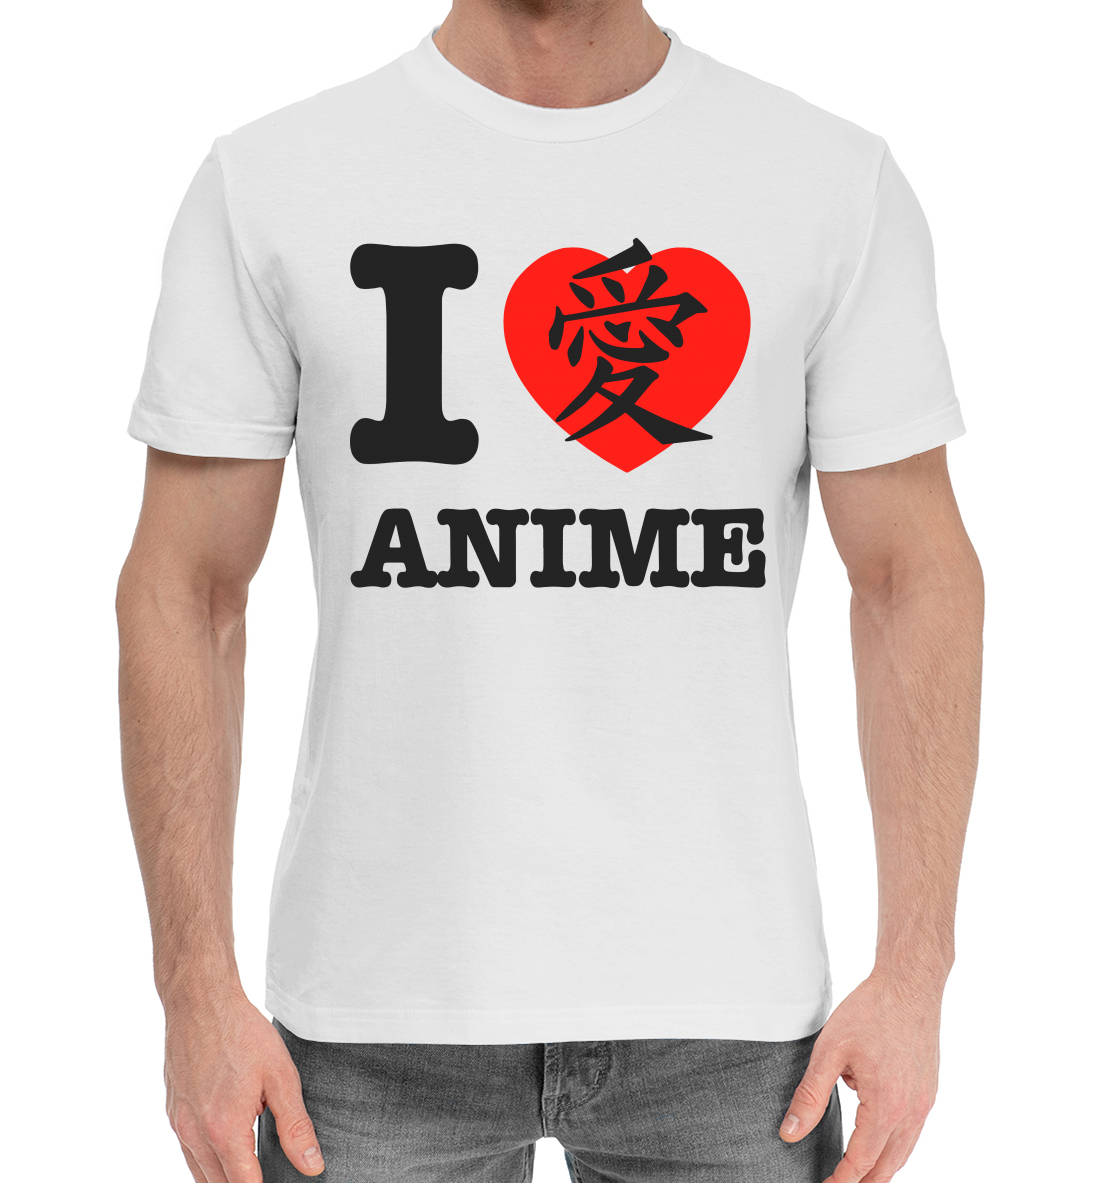 Мужская Хлопковая футболка с принтом I like anime, артикул AHG-931540-hfu-2mp